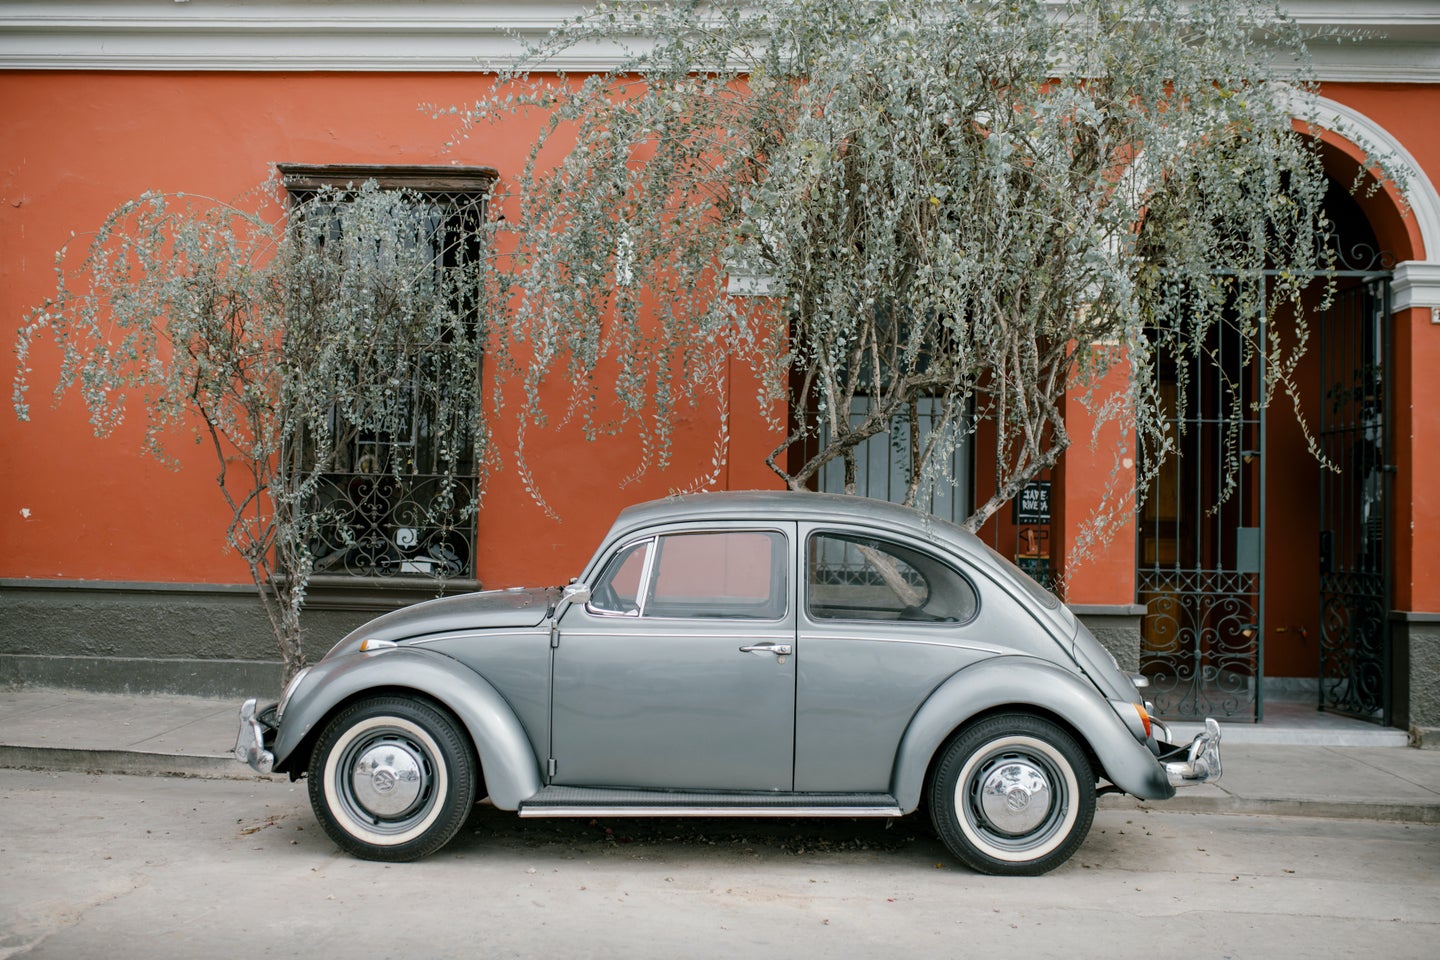 Vintage VW bug parked on the street.